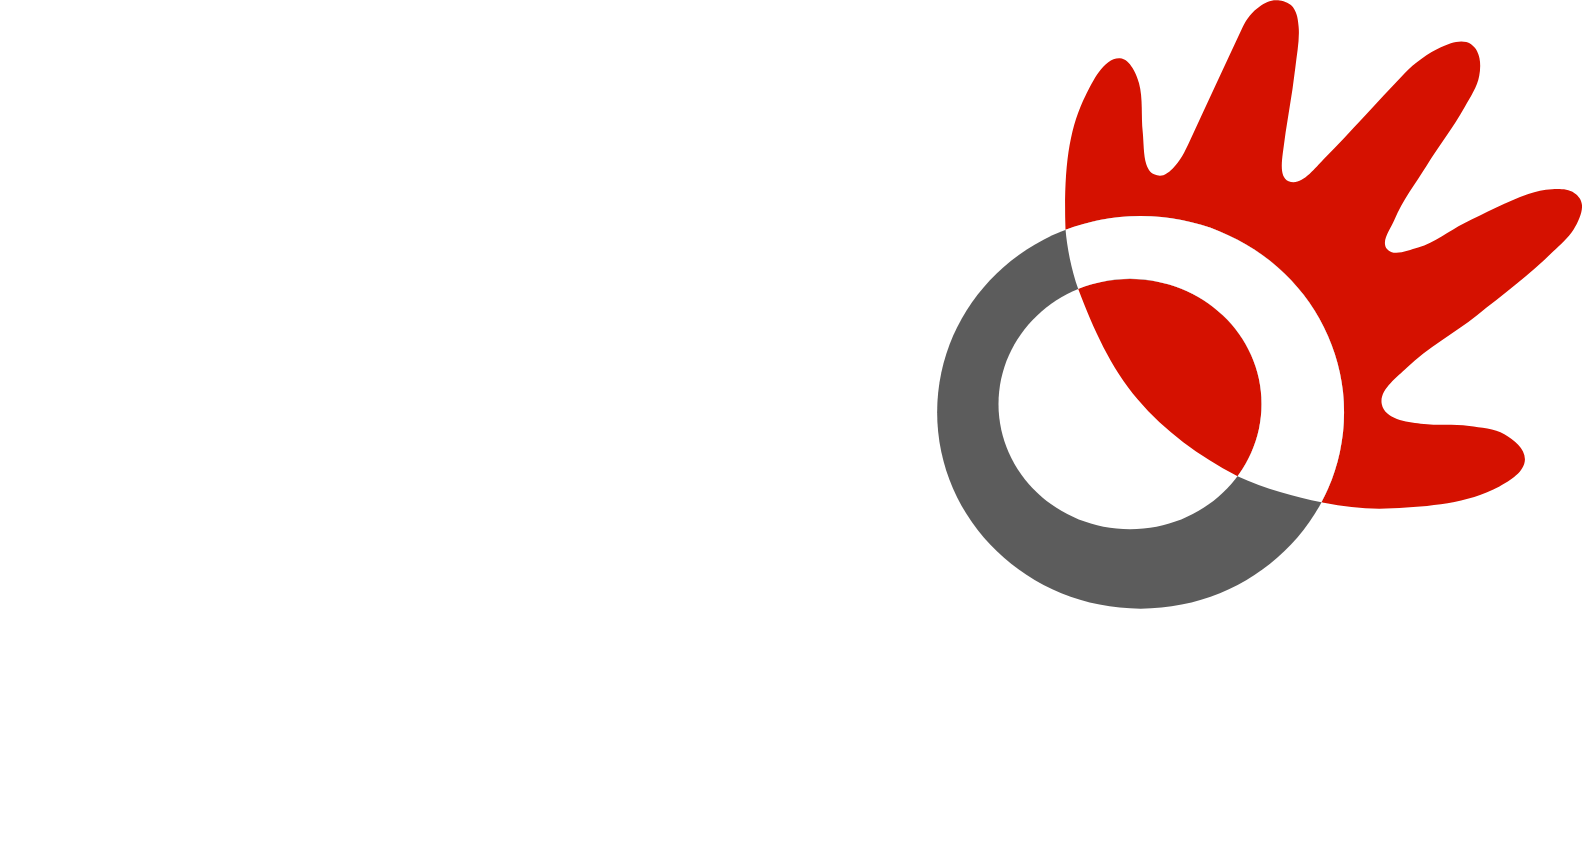 Telkom Indonesia logo large for dark backgrounds (transparent PNG)